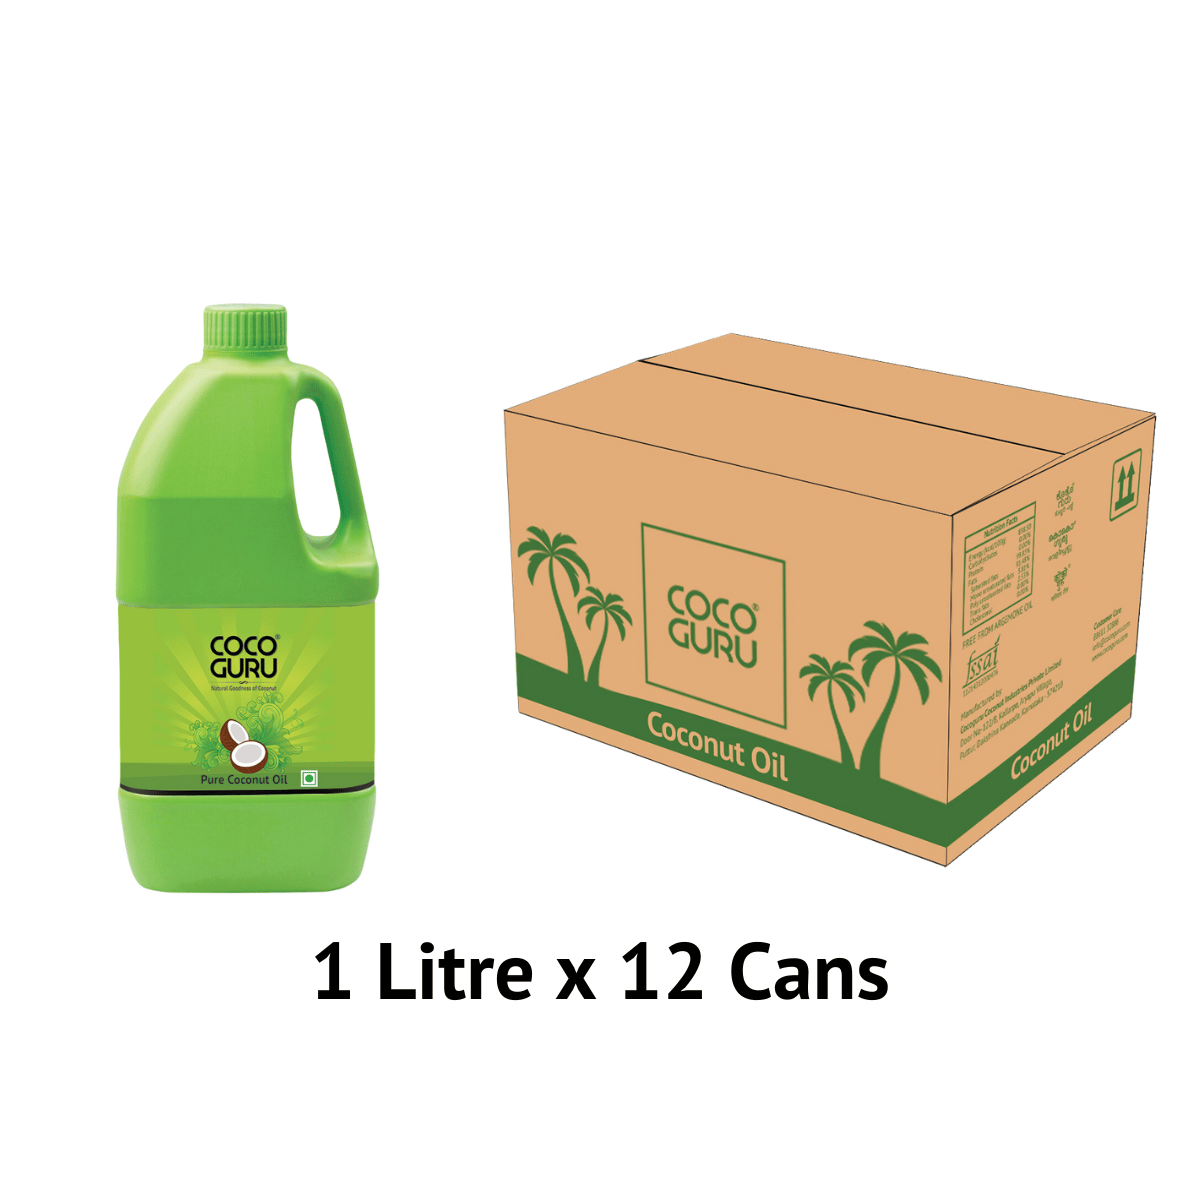 Cocoguru High Grade Coconut Oil in Jerry Can 1 Litre – 12 Litres Box